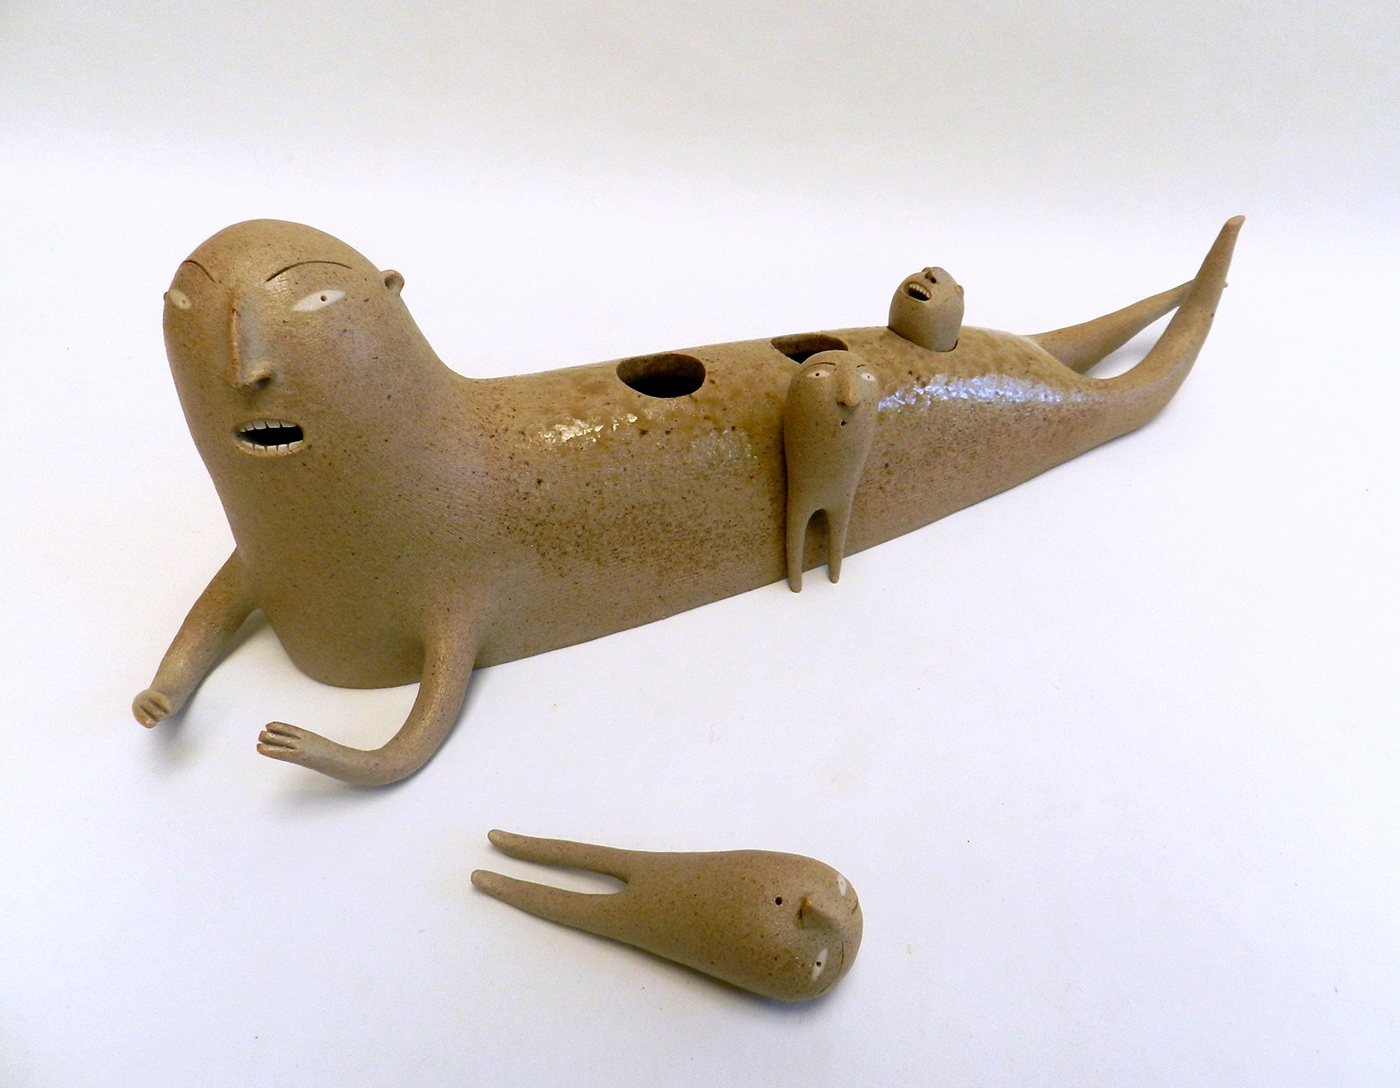 gres ceramica pequeño formato escultura Cerámica Contemporánea arteceramico